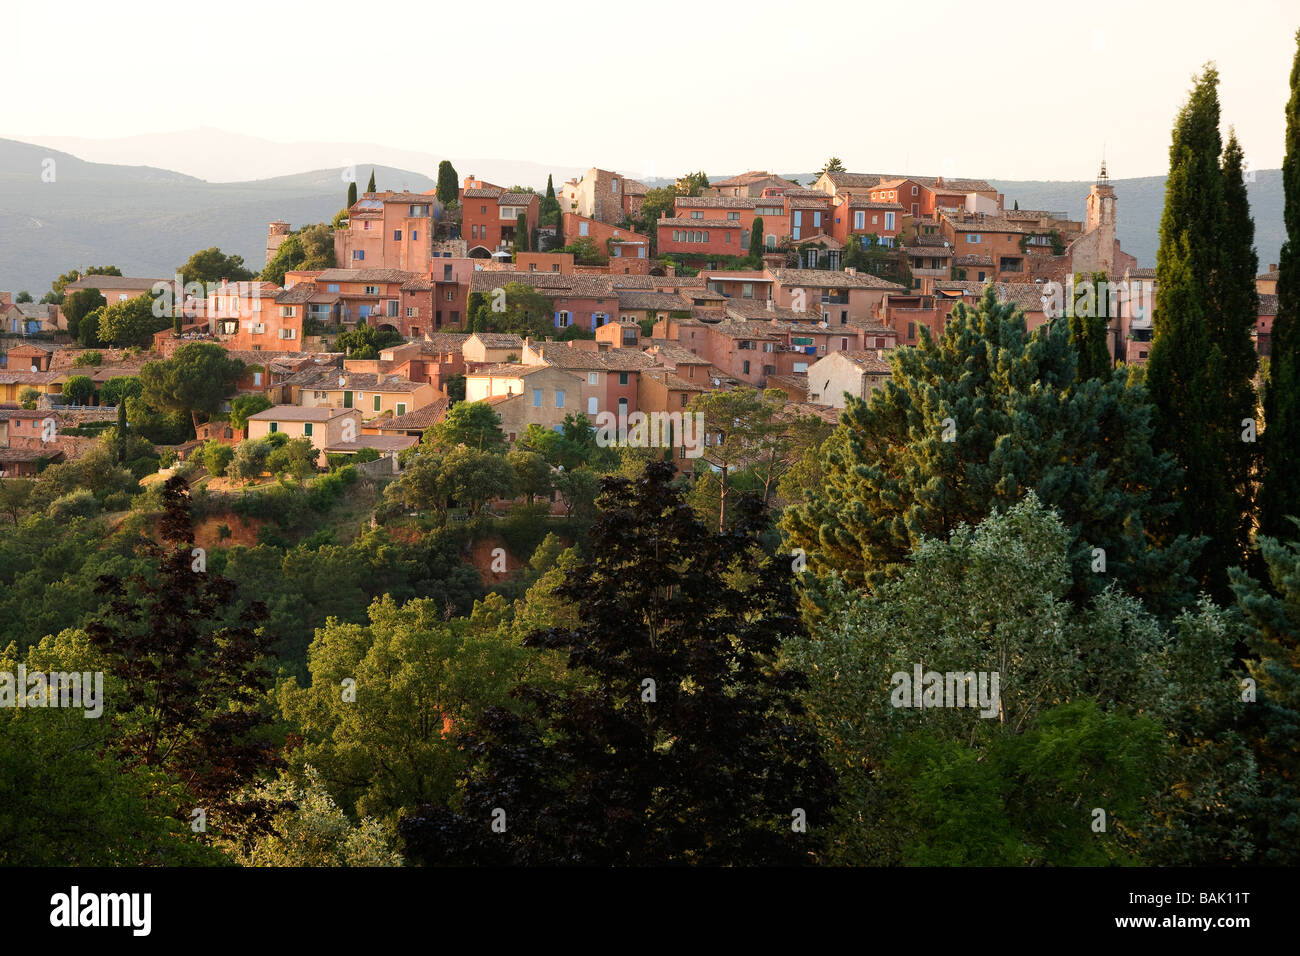 Francia, Vaucluse, Roussillon, denominata Les Plus Beaux Villages de France (i più bei villaggi di Francia) Foto Stock